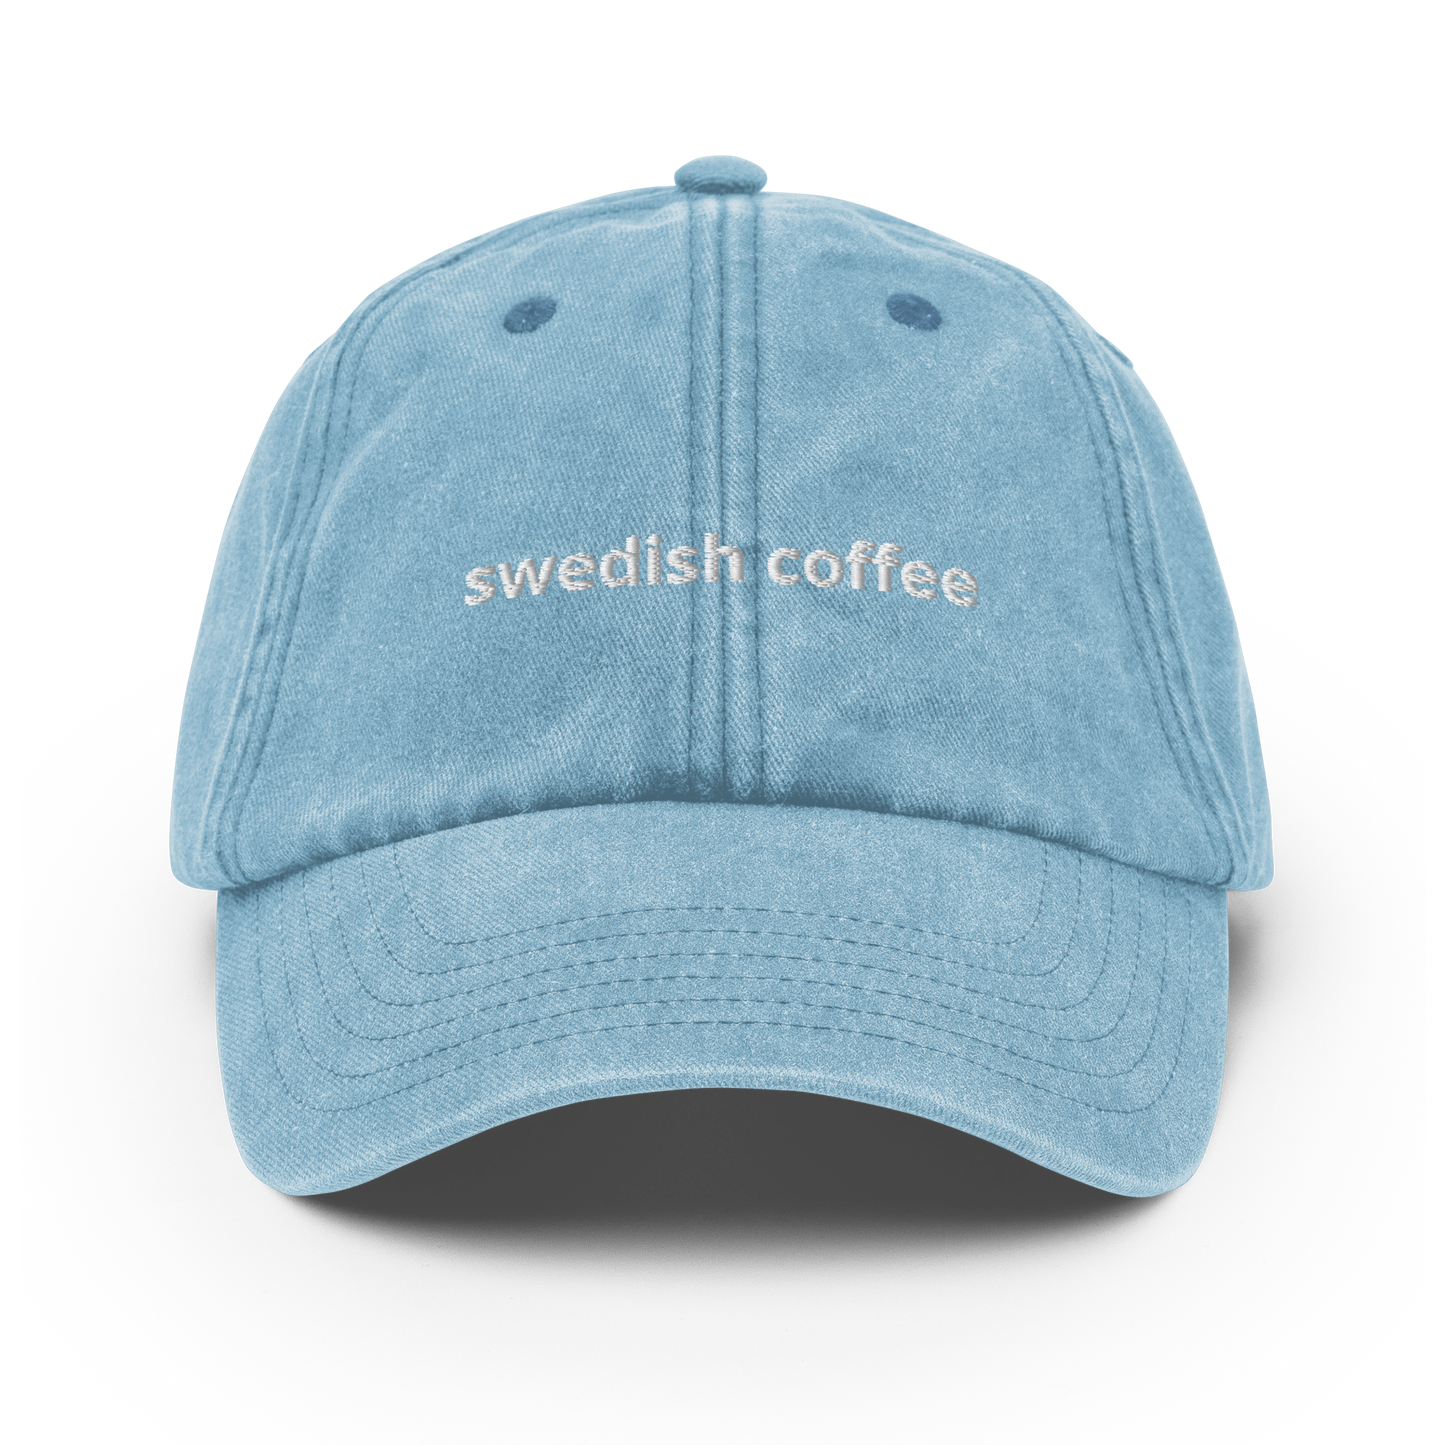 Swedish Coffee - Vintage Hat